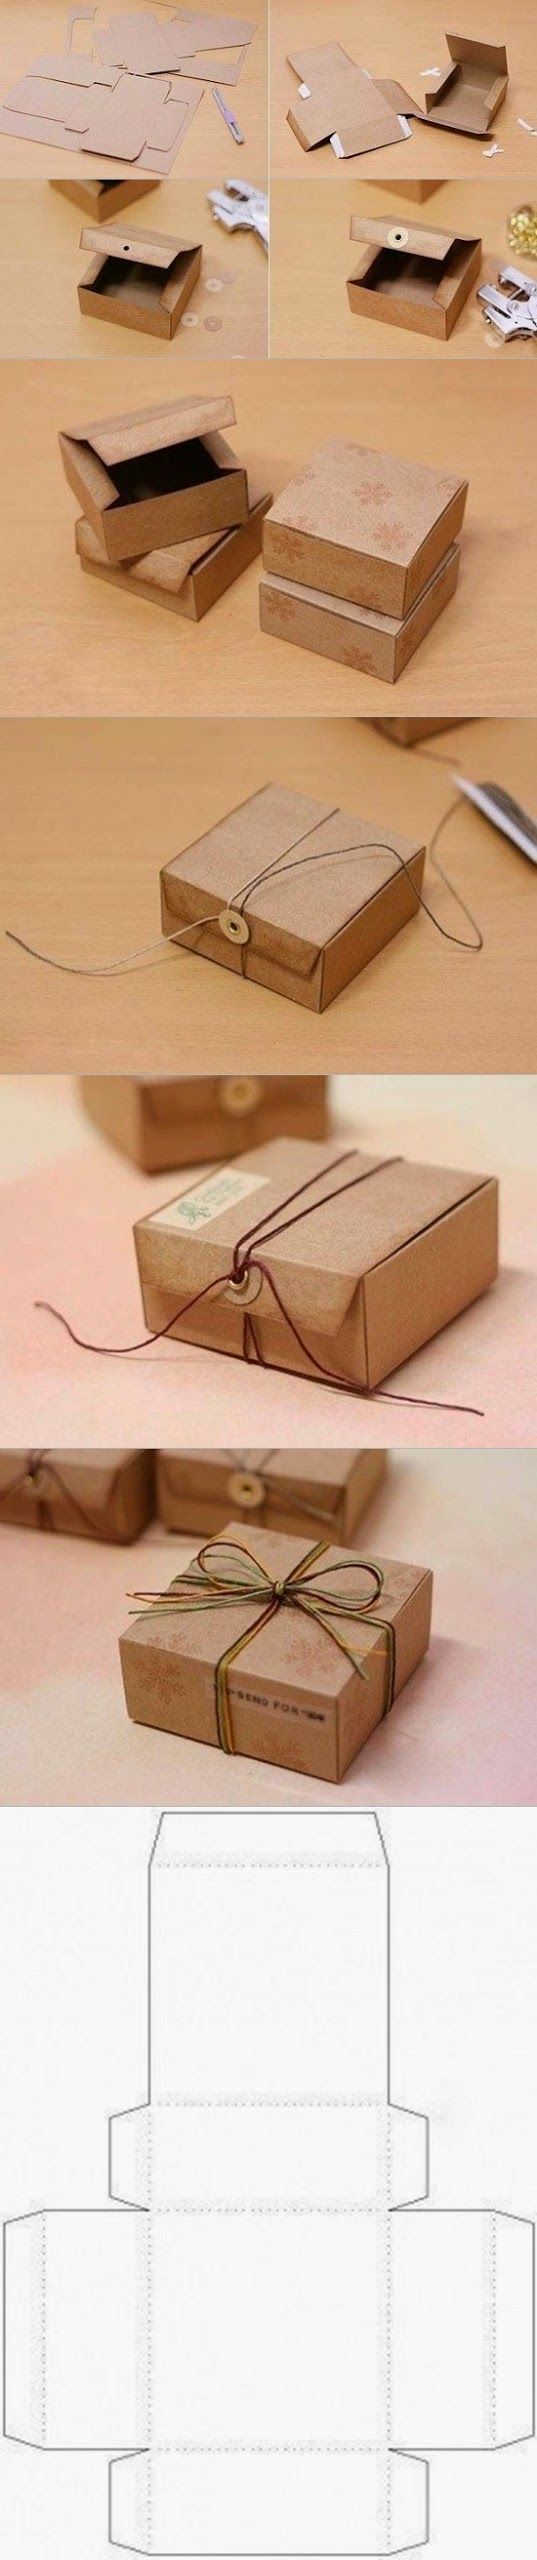 DIY : Gift Box from Cardboard